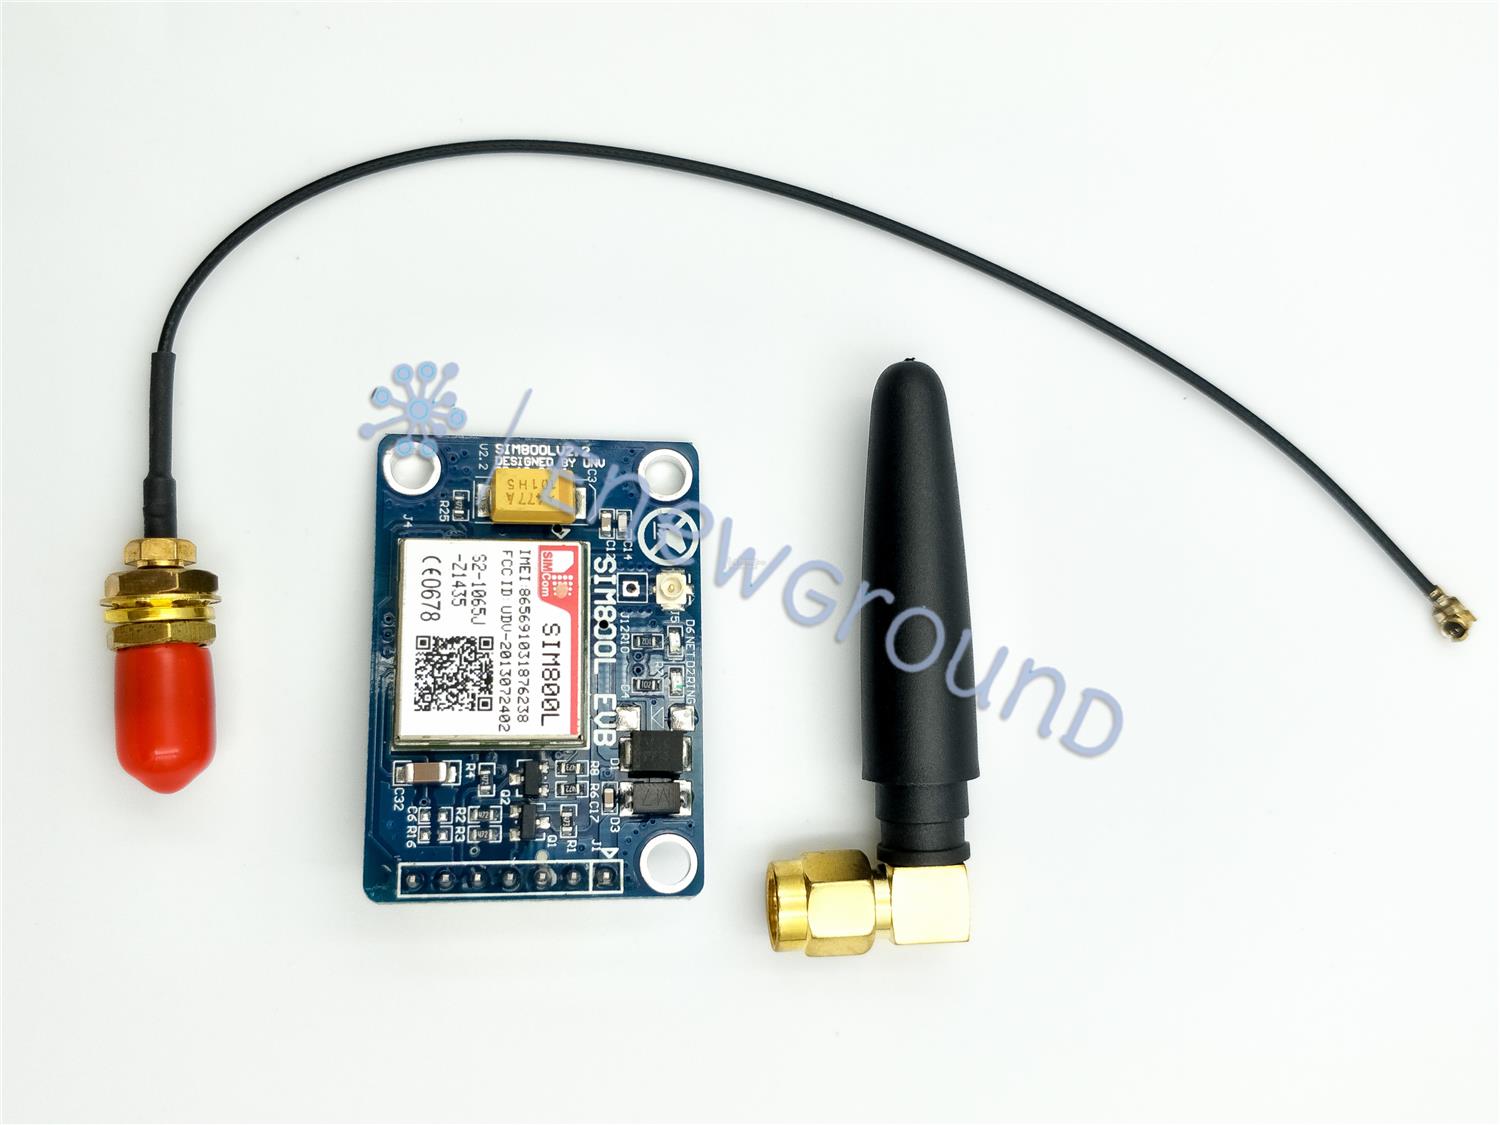 IPEX Connector Antenna for SIM800L GPRS SIM GSM Wireless Module